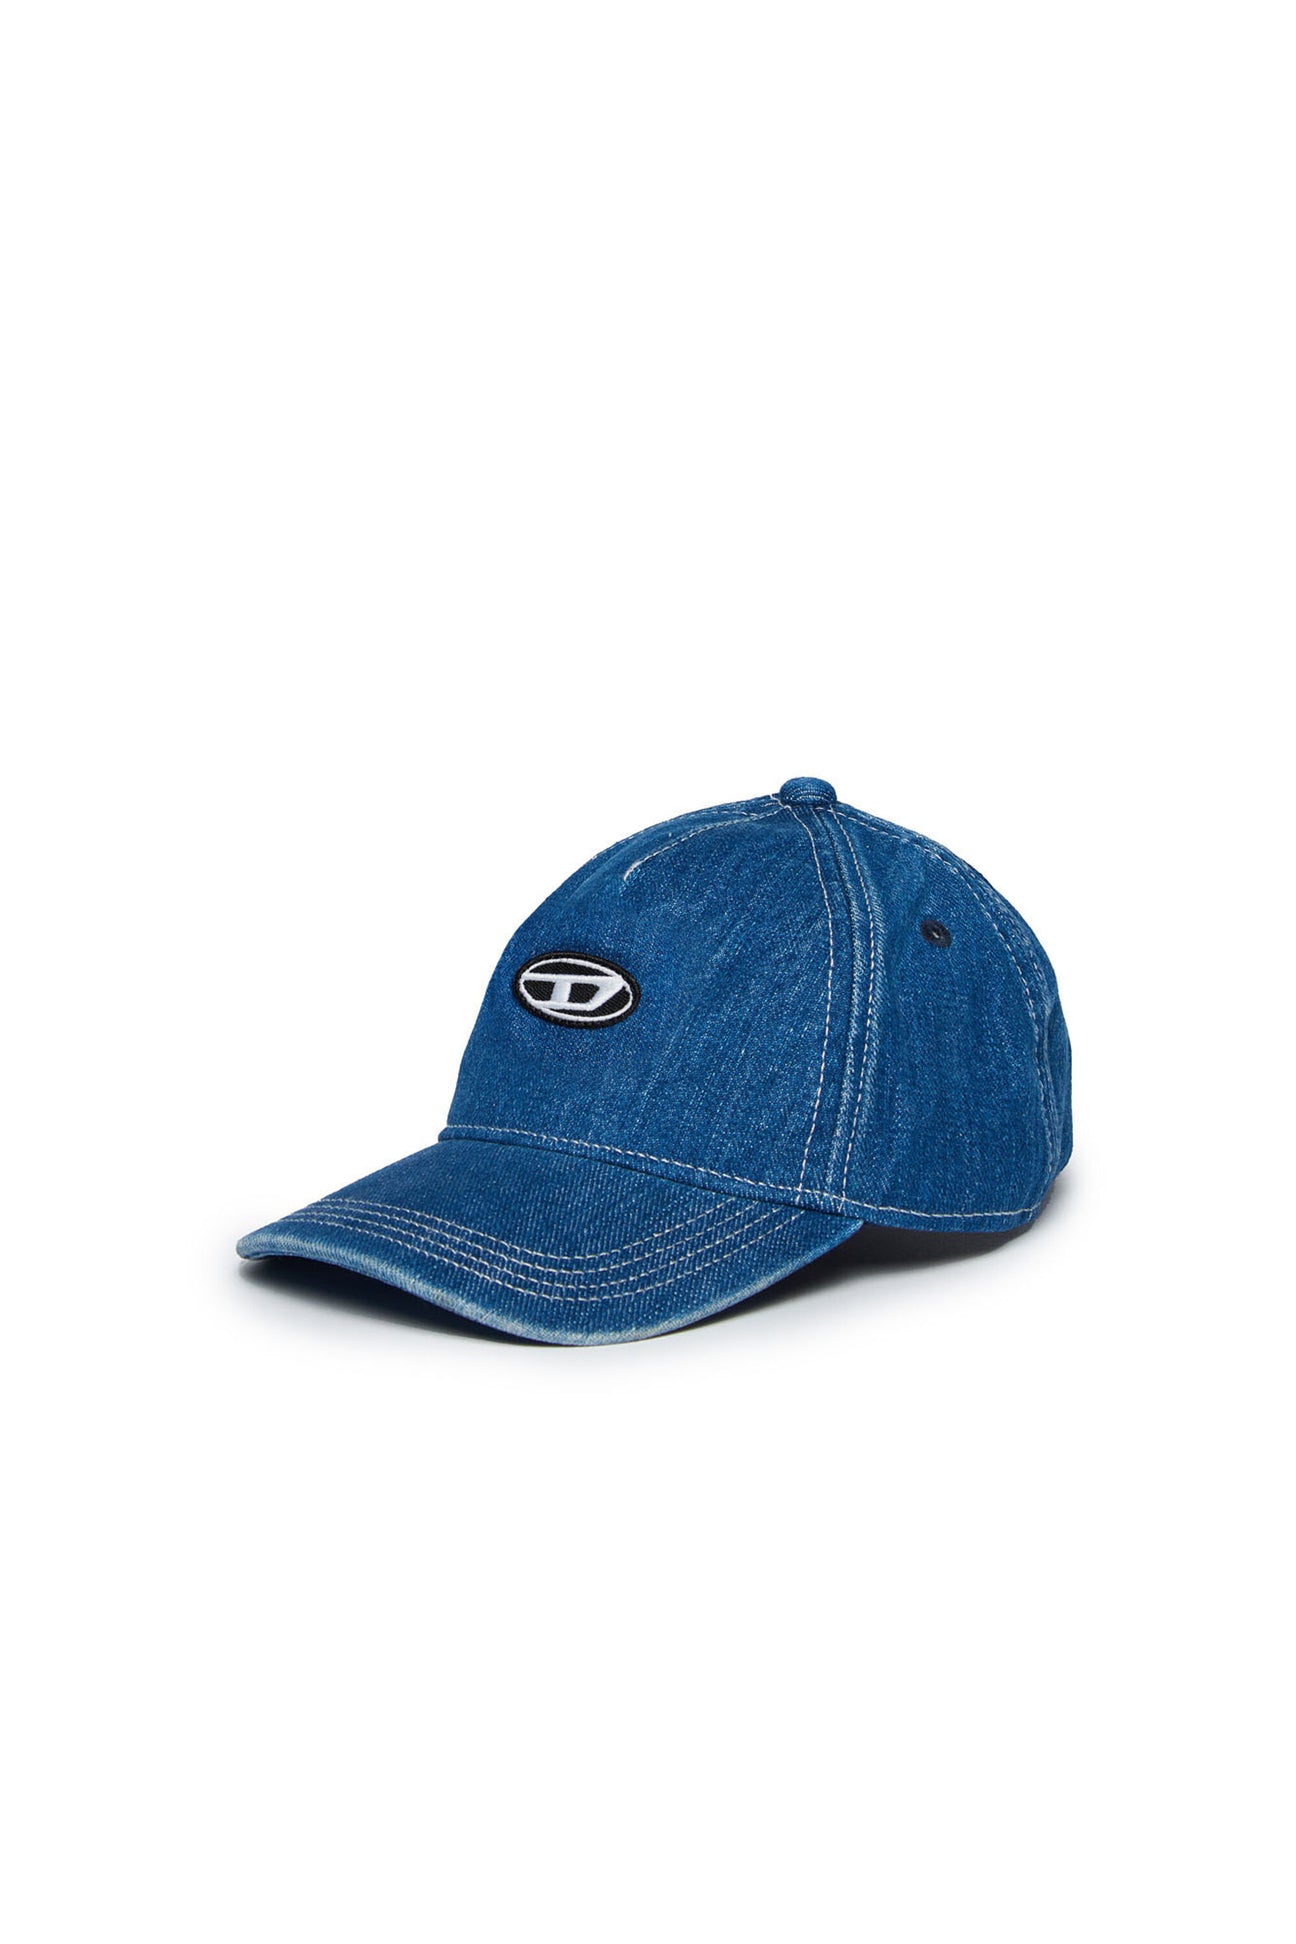 Denim baseball cap with Oval D patch Denim baseball cap with Oval D patch